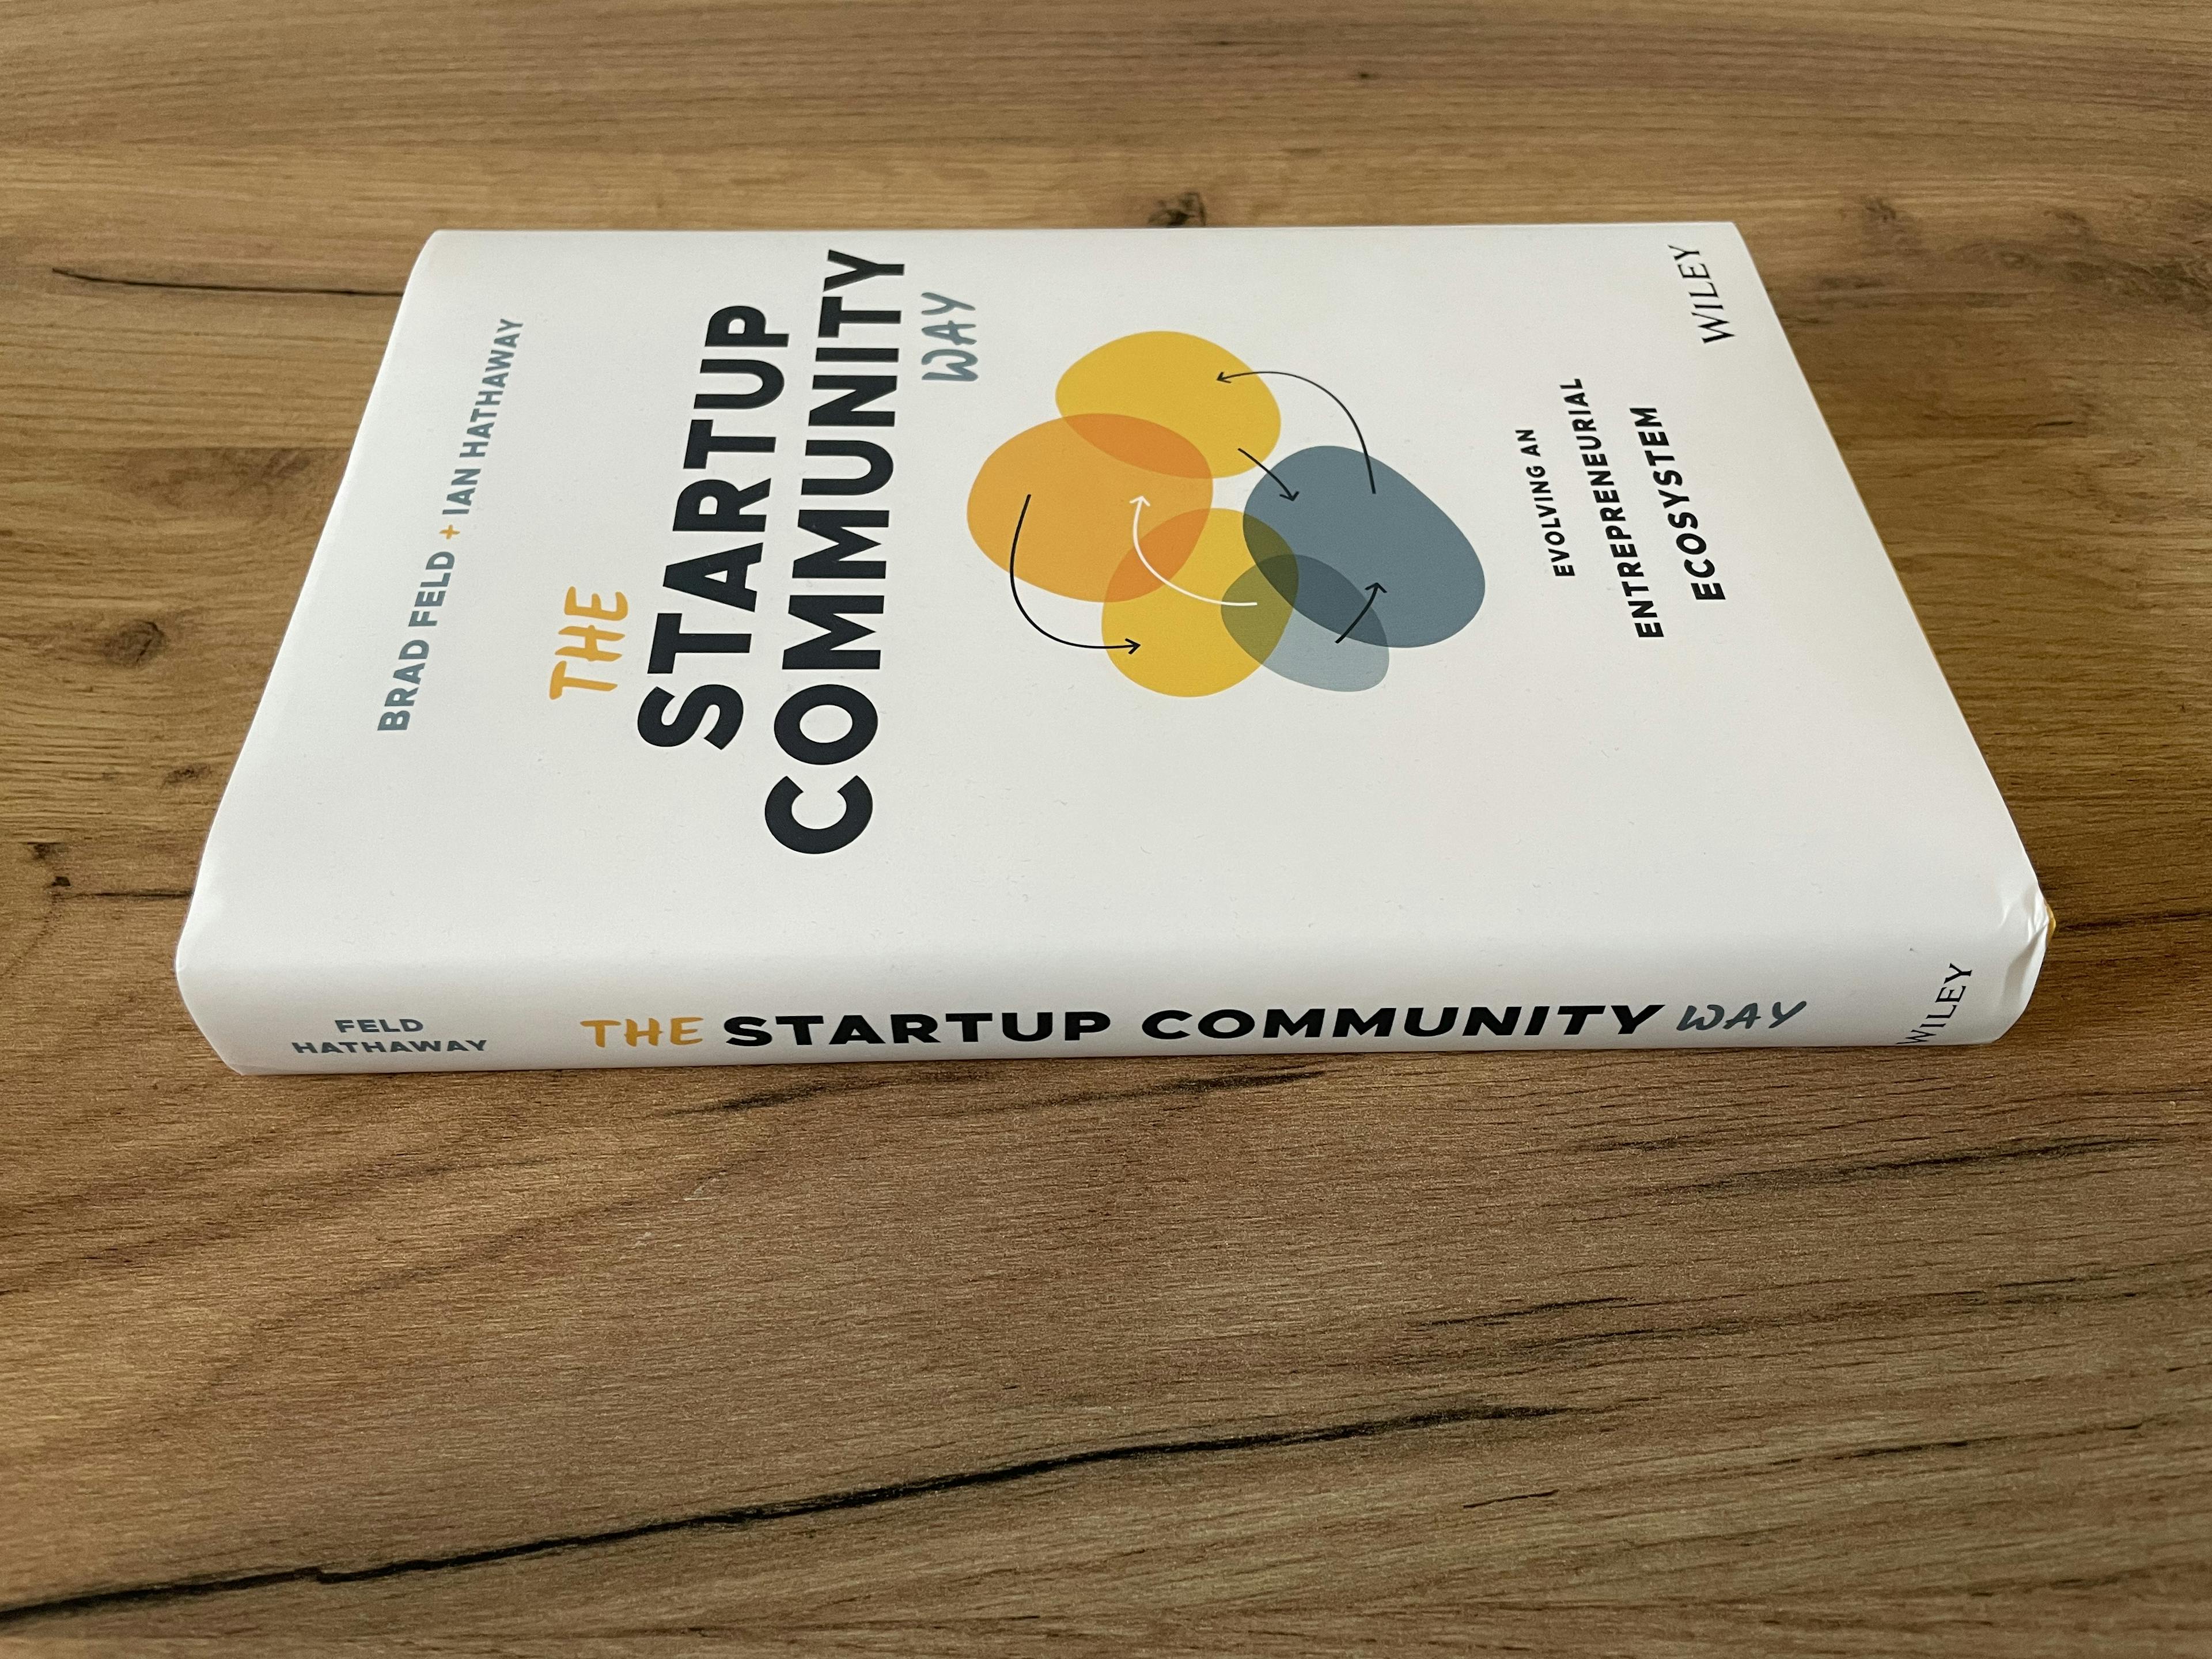 Picture of Książka "The Startup Community Way". Autorzy: Brad Feld + Ian Hathaway